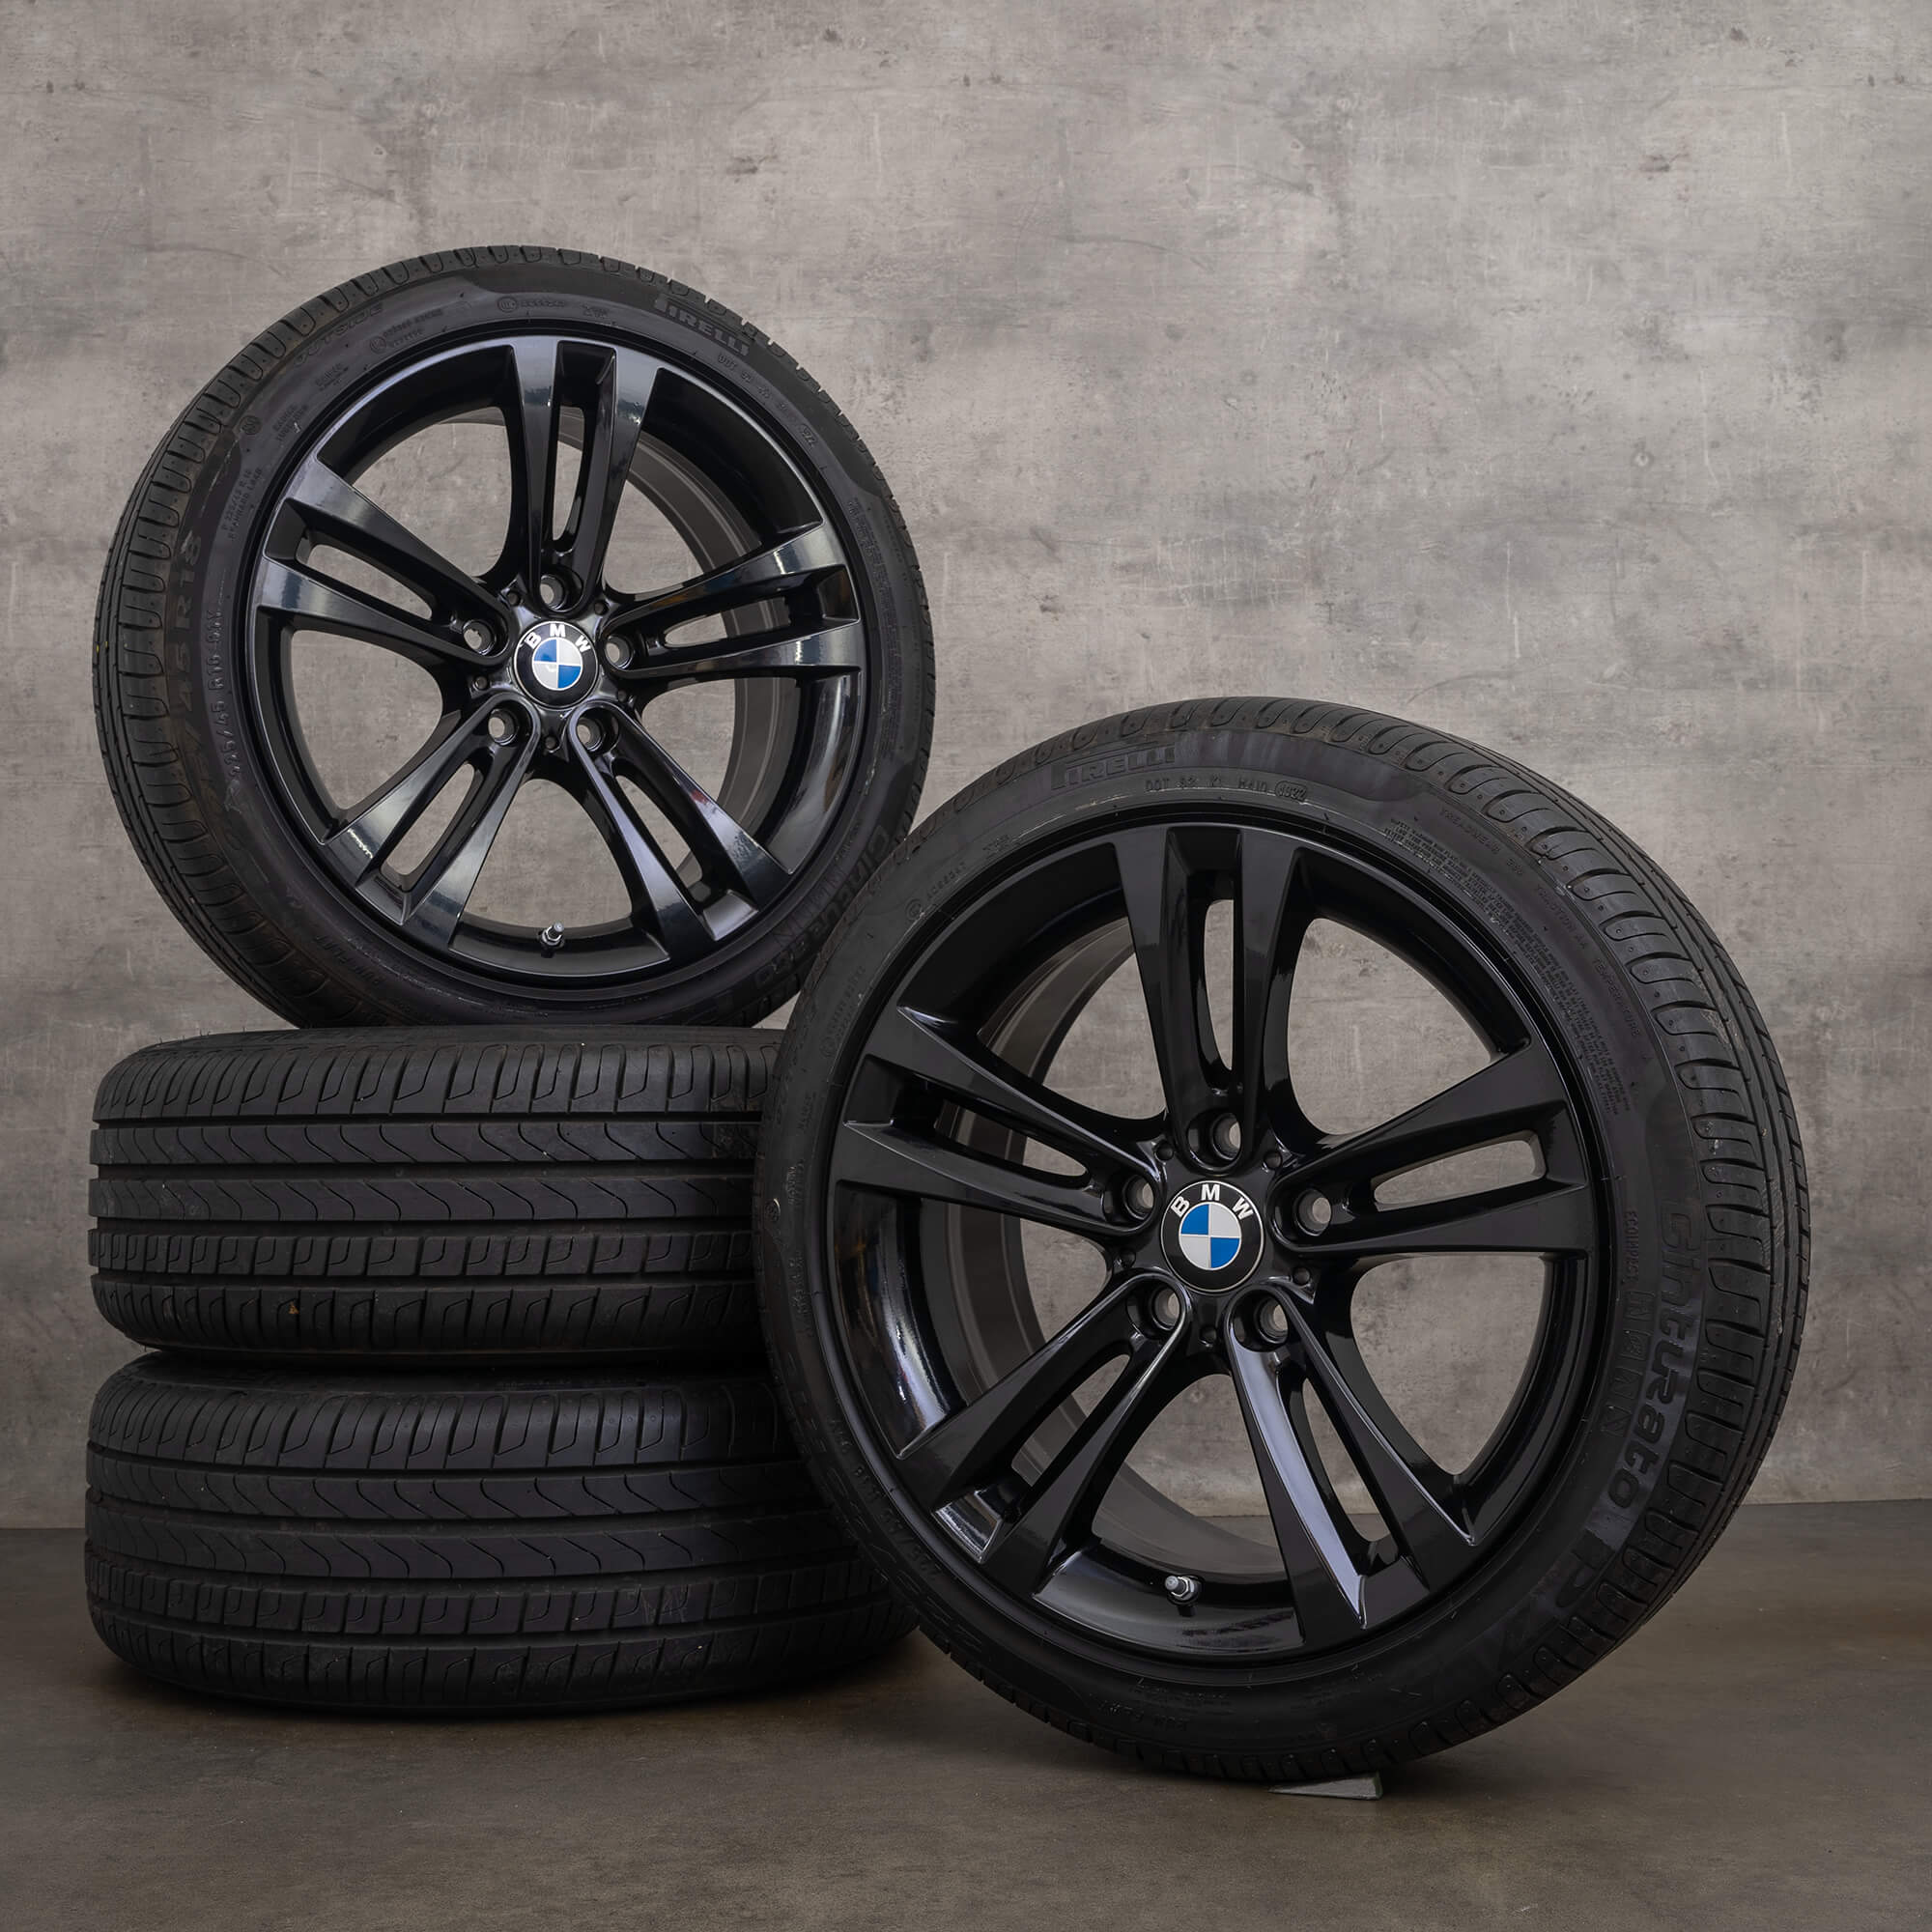 OEM BMW 3 Series F30 F31 4 F32 F33 F36 18 inch rims summer tires Styling 397 6796247 black high gloss